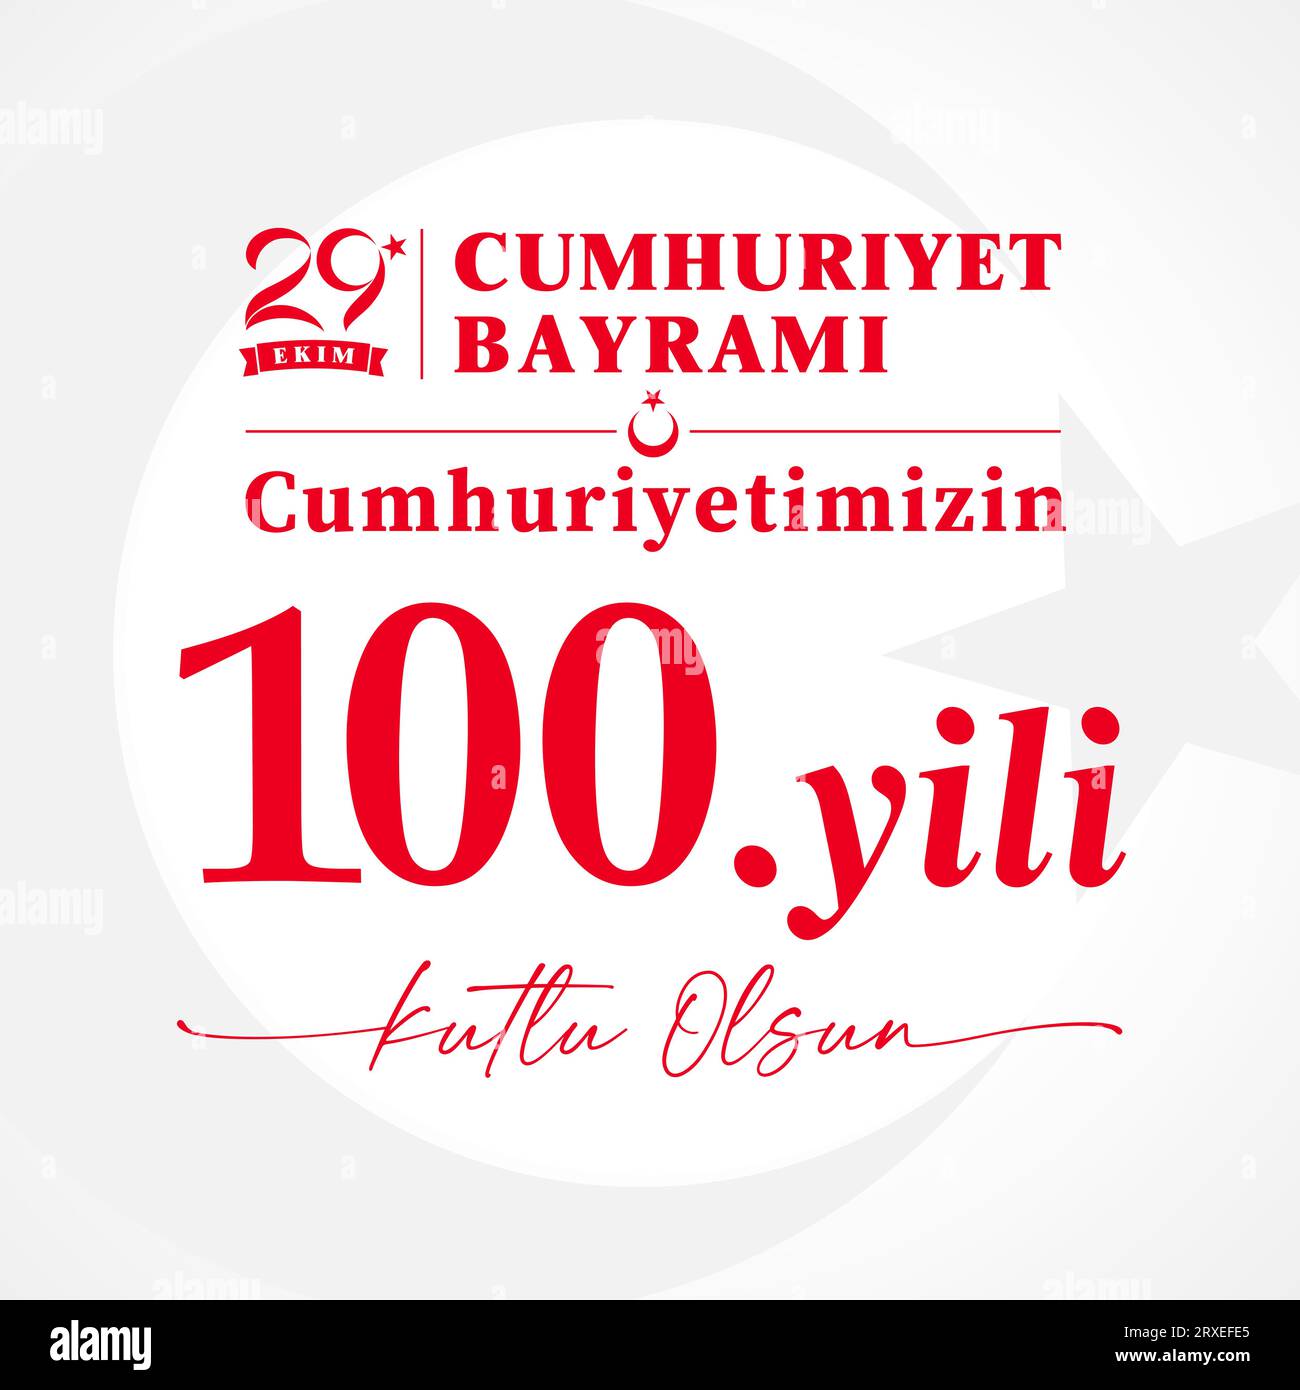 Türkischer Text, Übersetzung ist 29 Ekim bedeutet Oktober 29. Cumhuriyet Bayrami bedeutet Republik Tag, Cumhuriyetimizin 100 yili - 100 Jahre unserer Republik. Stock Vektor